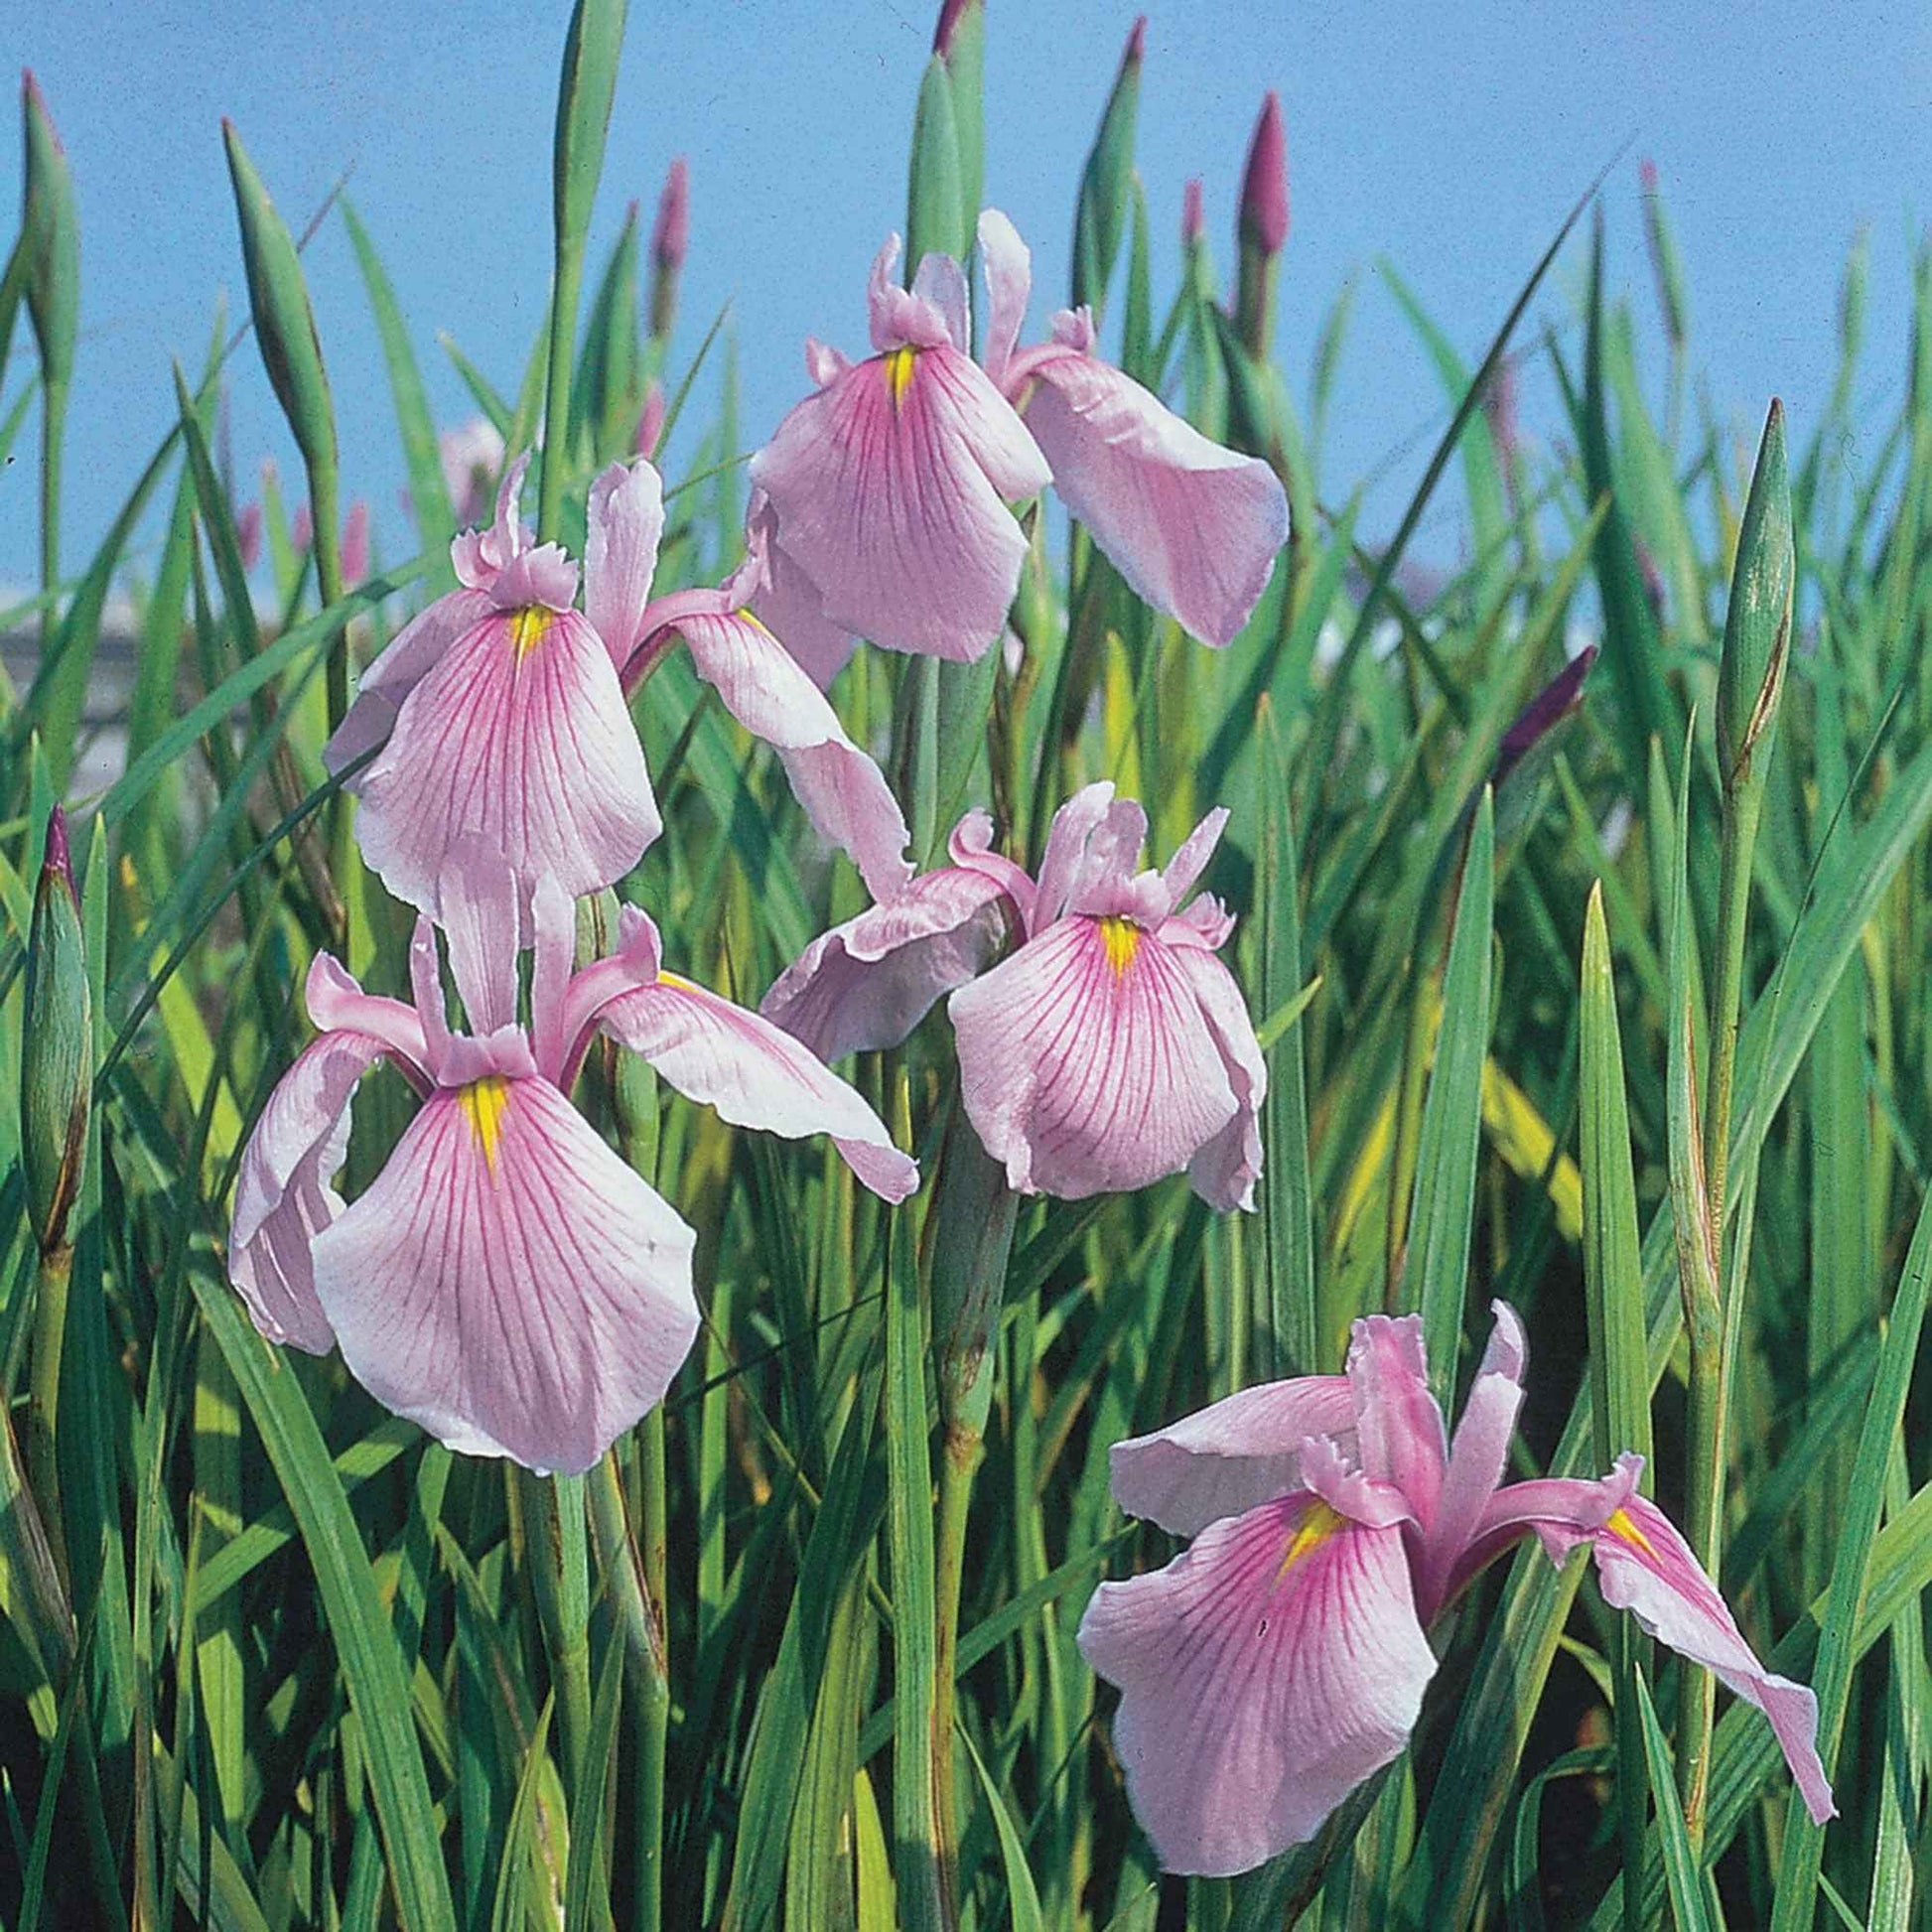 Iris du Japon Iris 'Rose Queen' rose - Plante des marais, Plante de berge - Bassin naturel